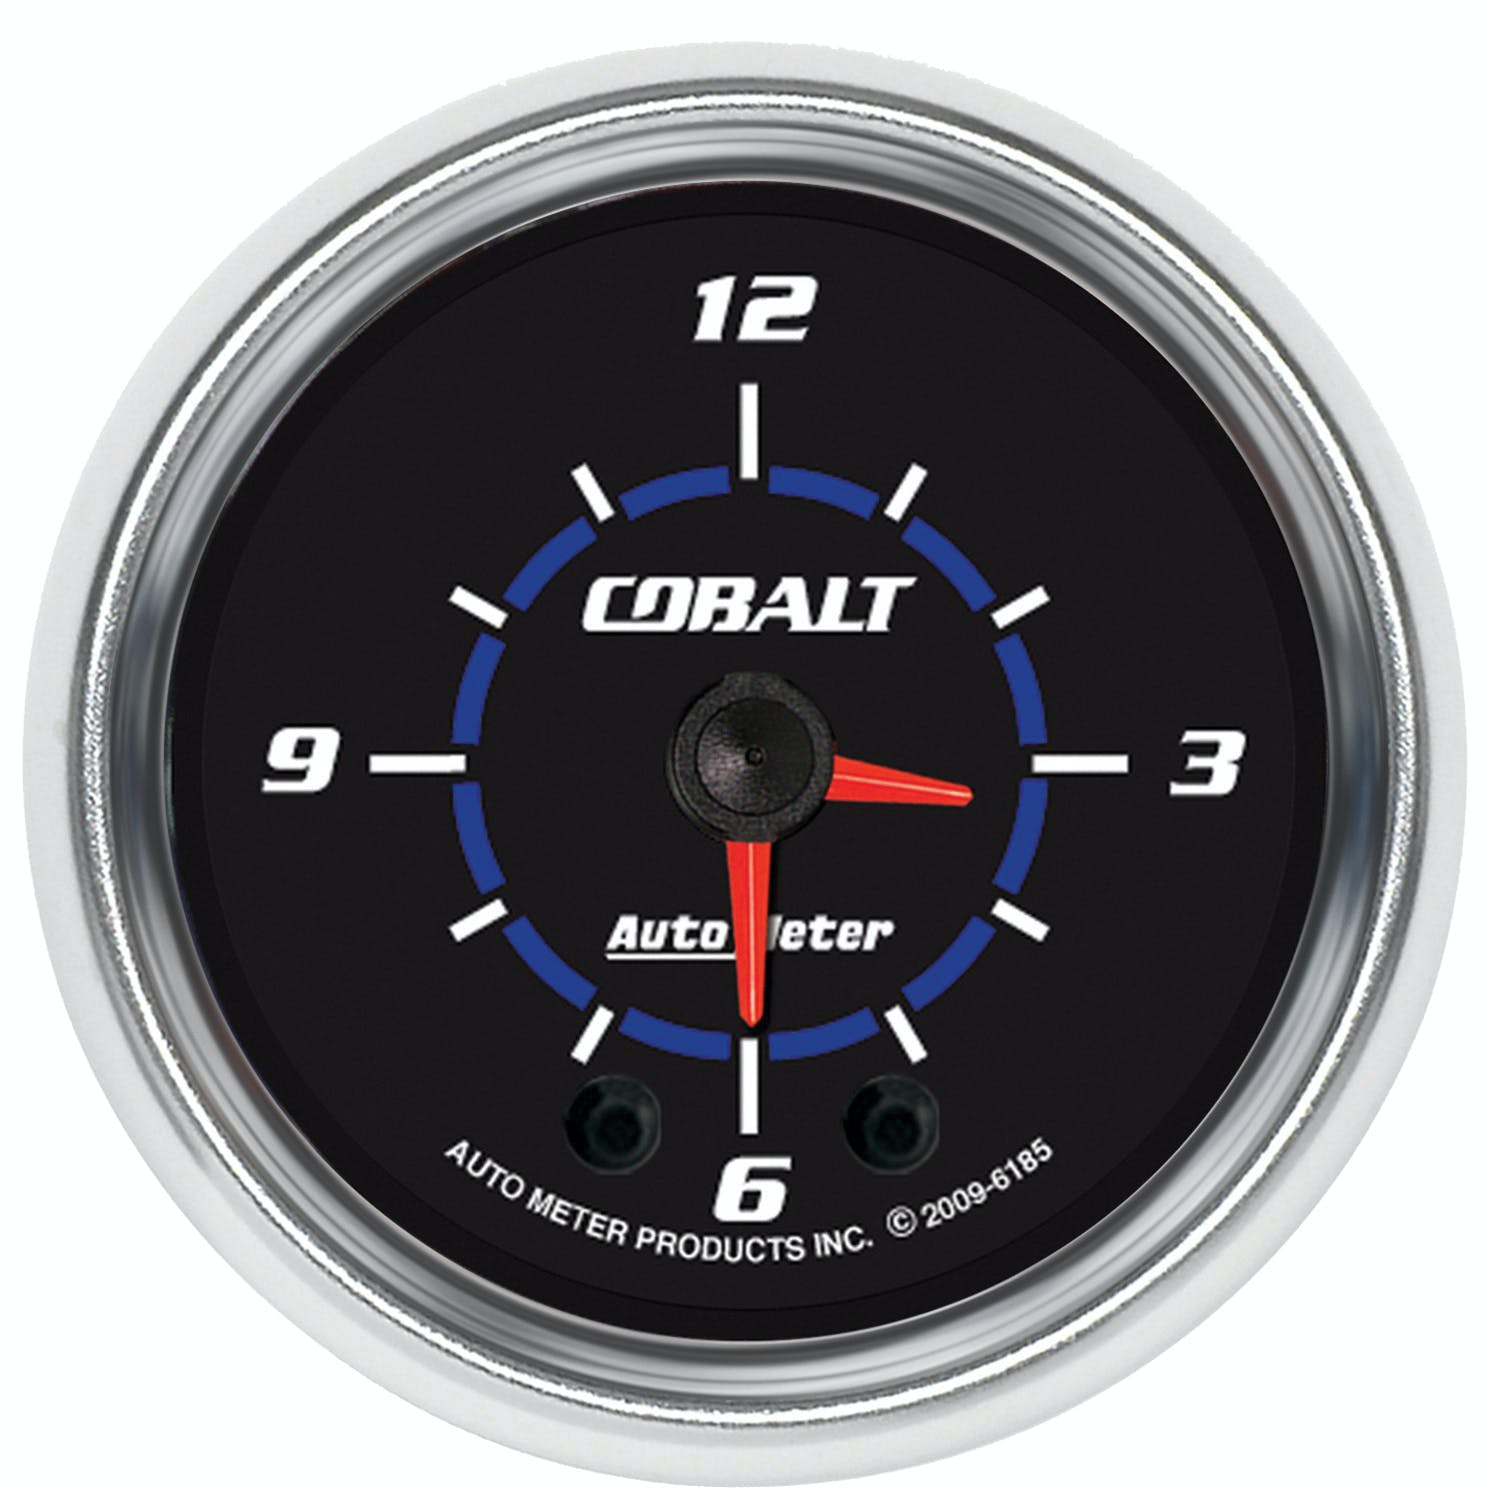 AutoMeter Products 6185 2-1/16 Clock, Cobalt